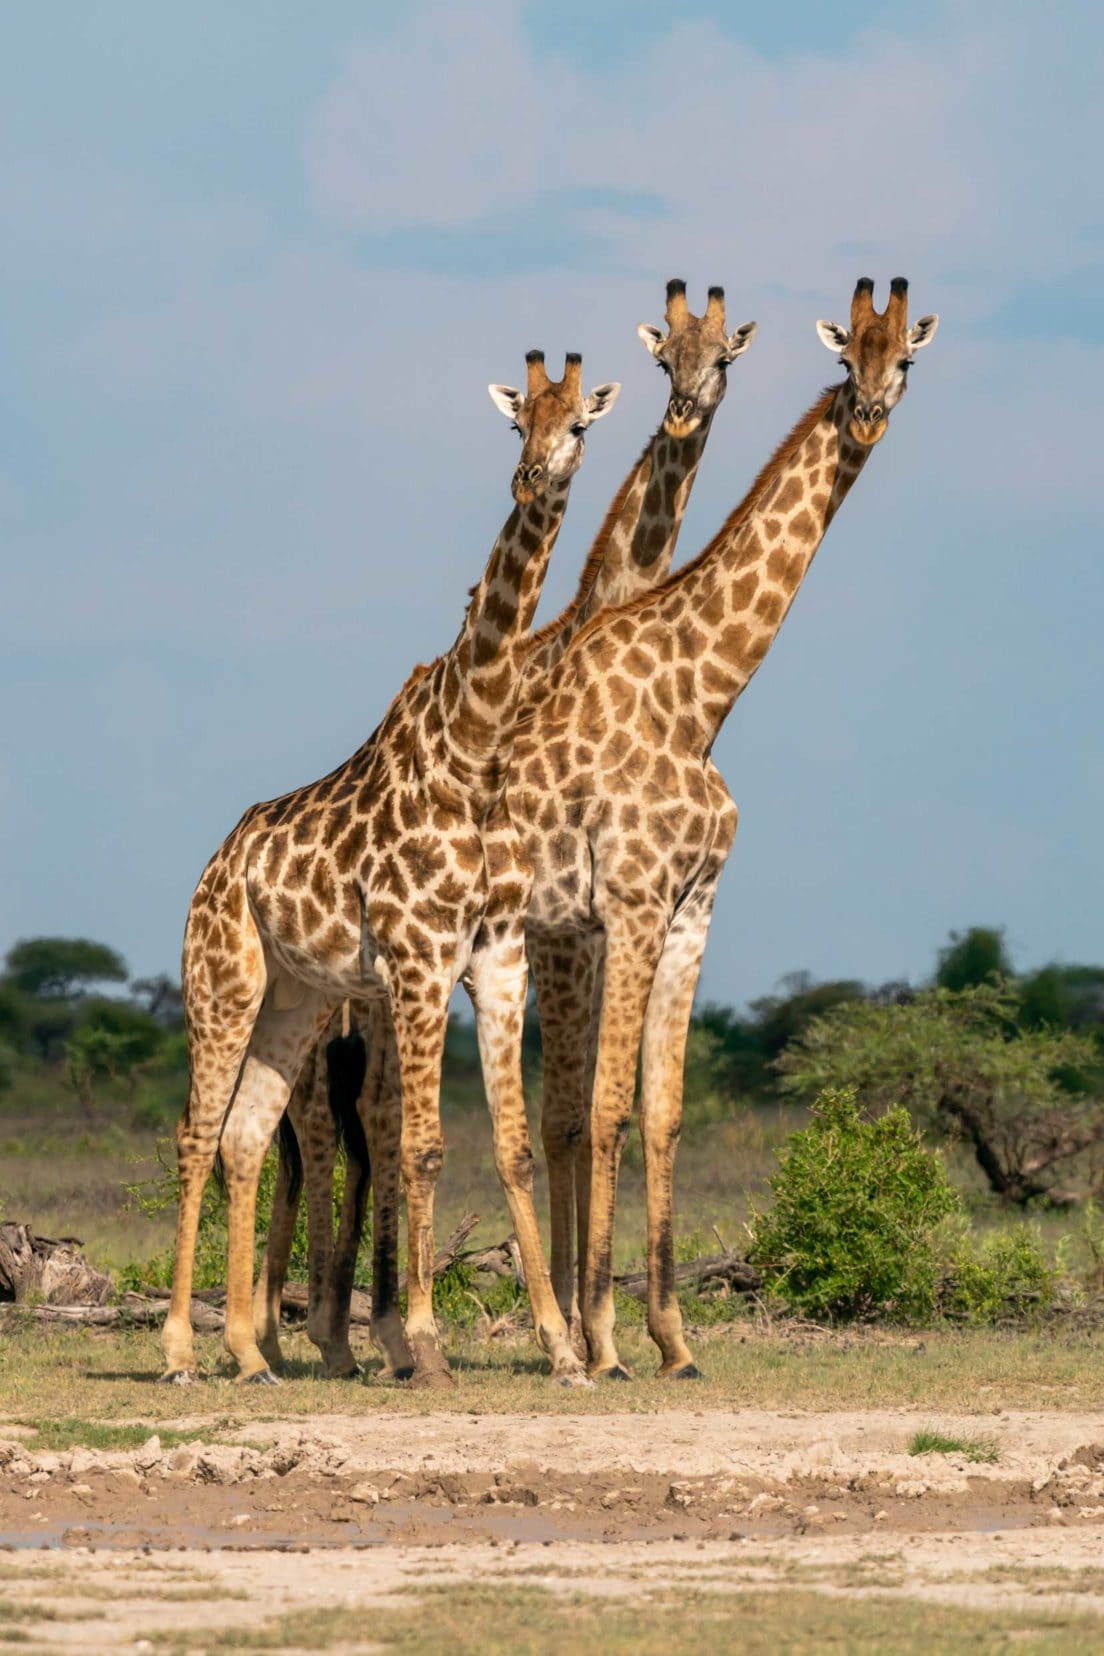 Giraffes at Nxai pan national park